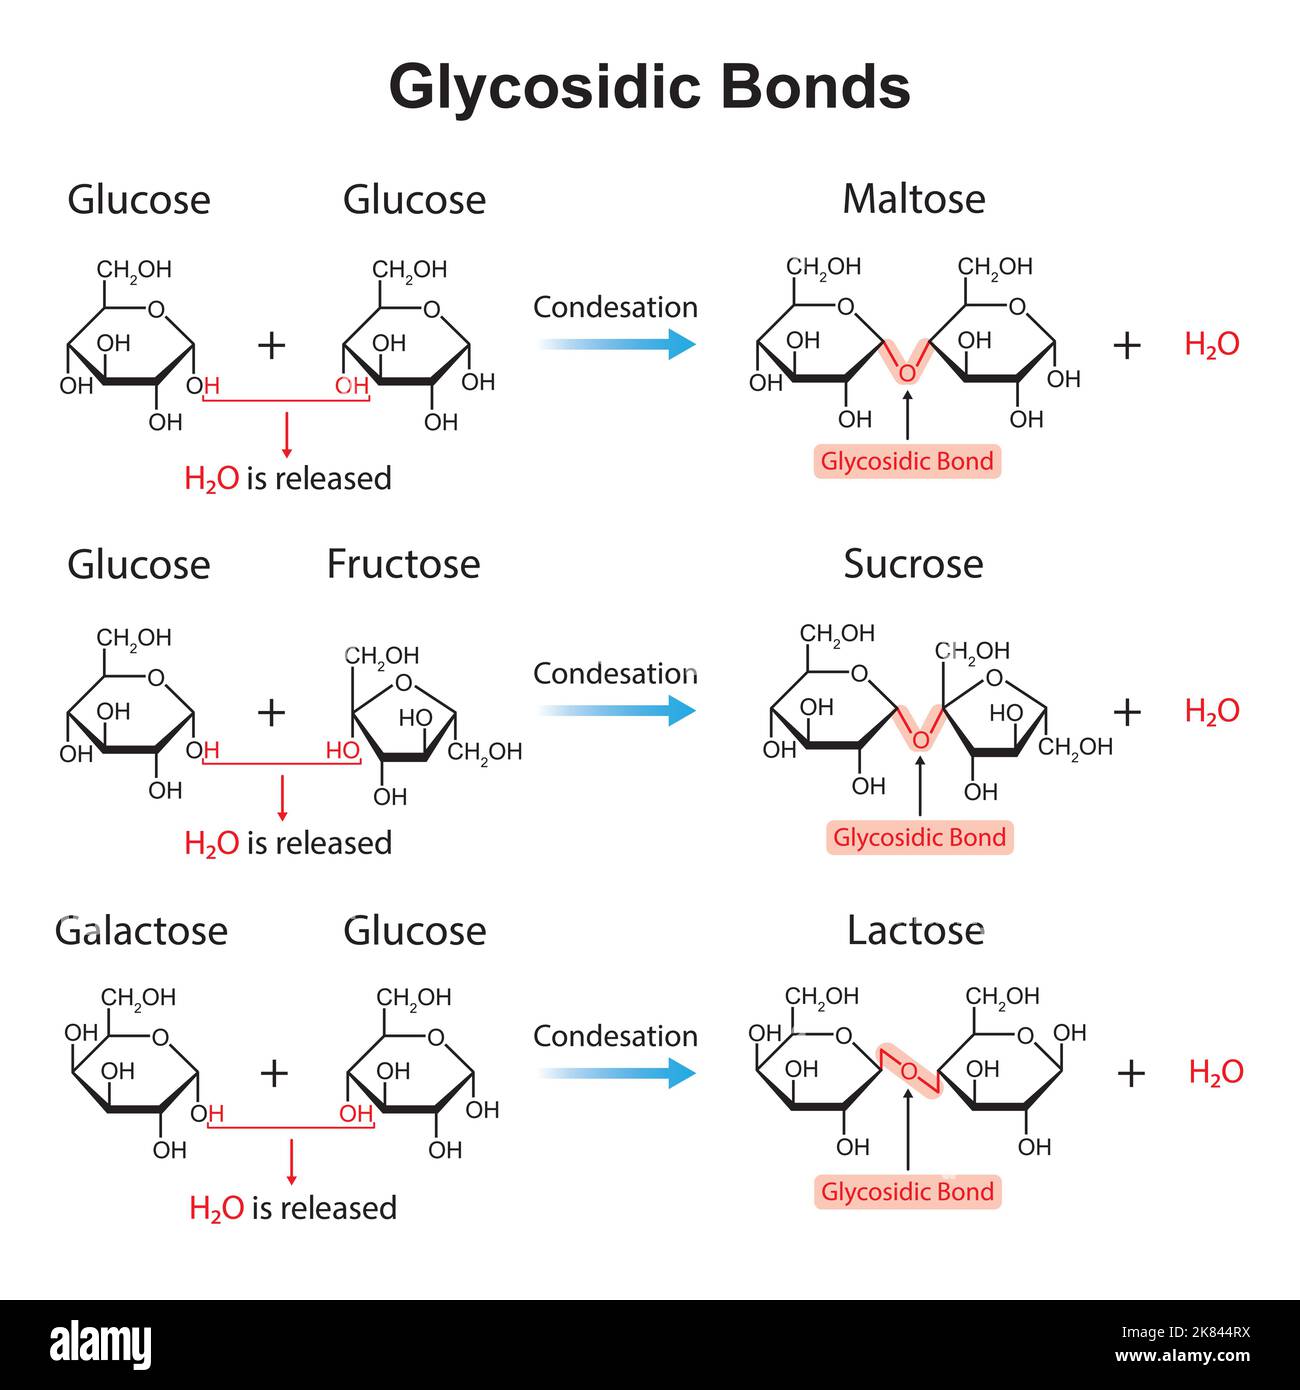 Scientific Designing of Glycosidic Bonds. Glycosidic Bond Formation From Two Monomers. Vector Illustration. Stock Vector